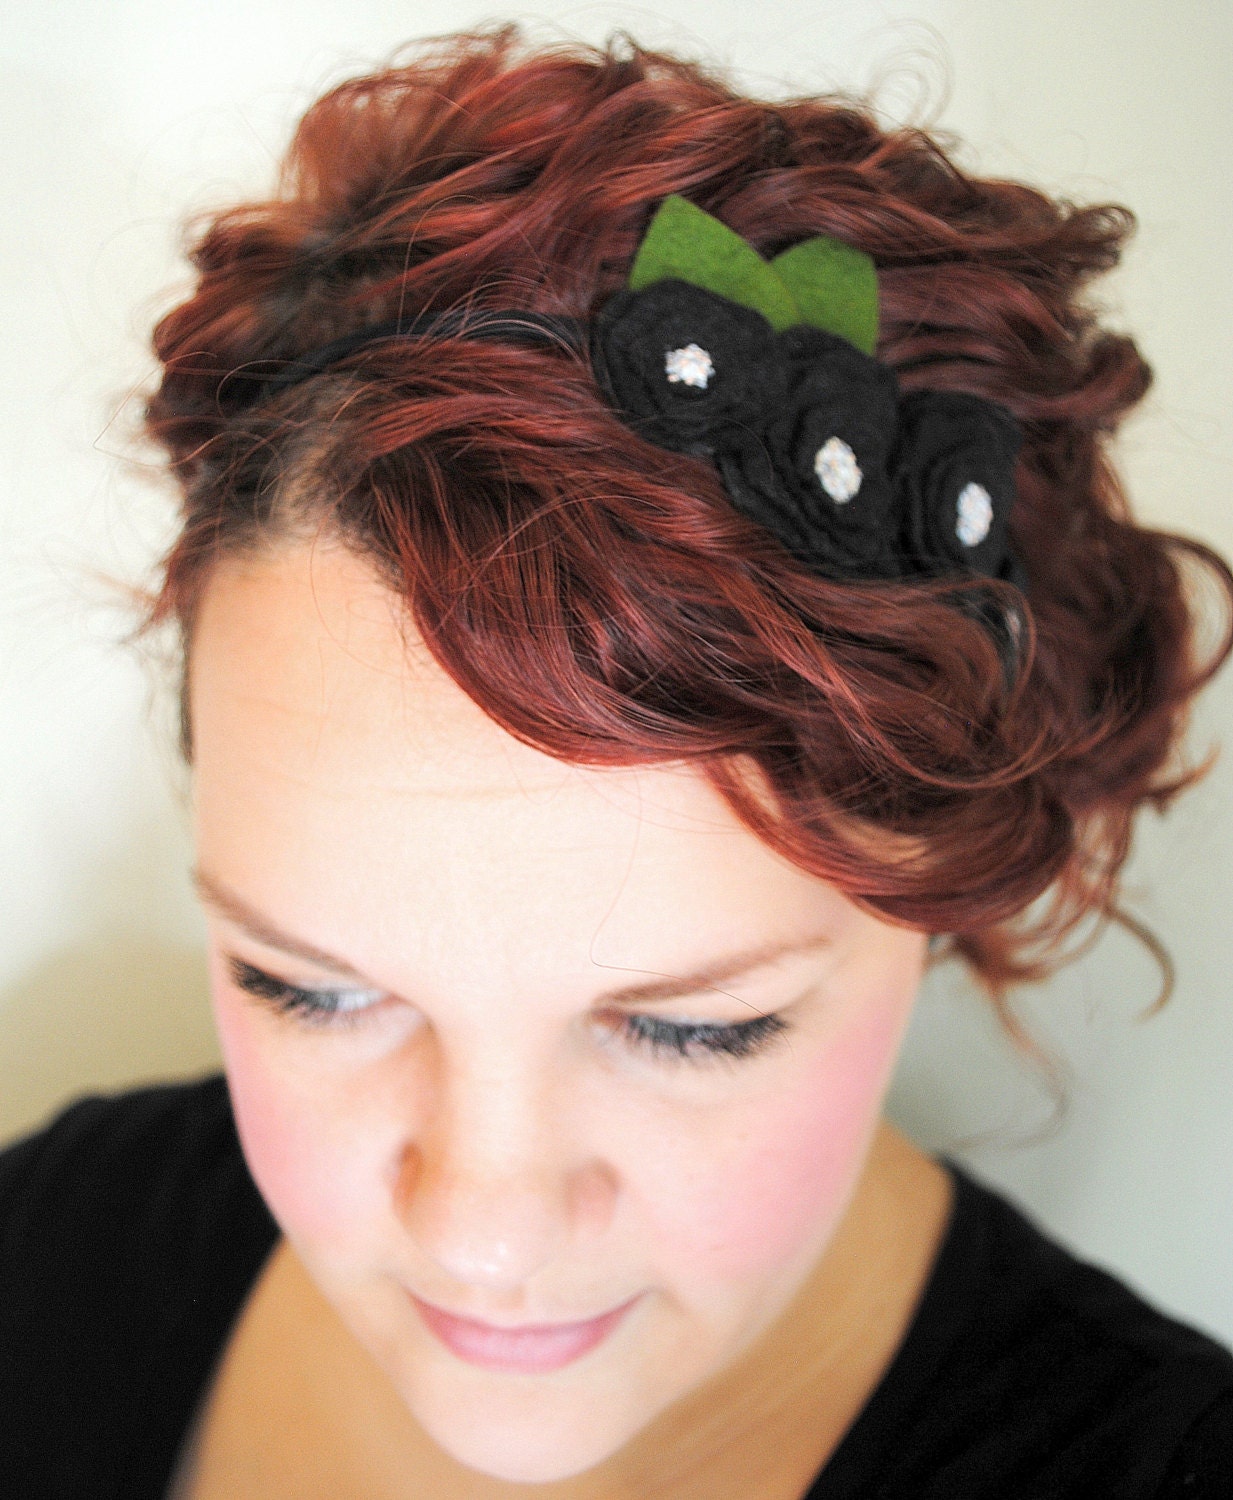 Black Flower Headband - Wool Felt Flower - Peony Headband - Statement Hair Accessory - FoldingChairDesigns